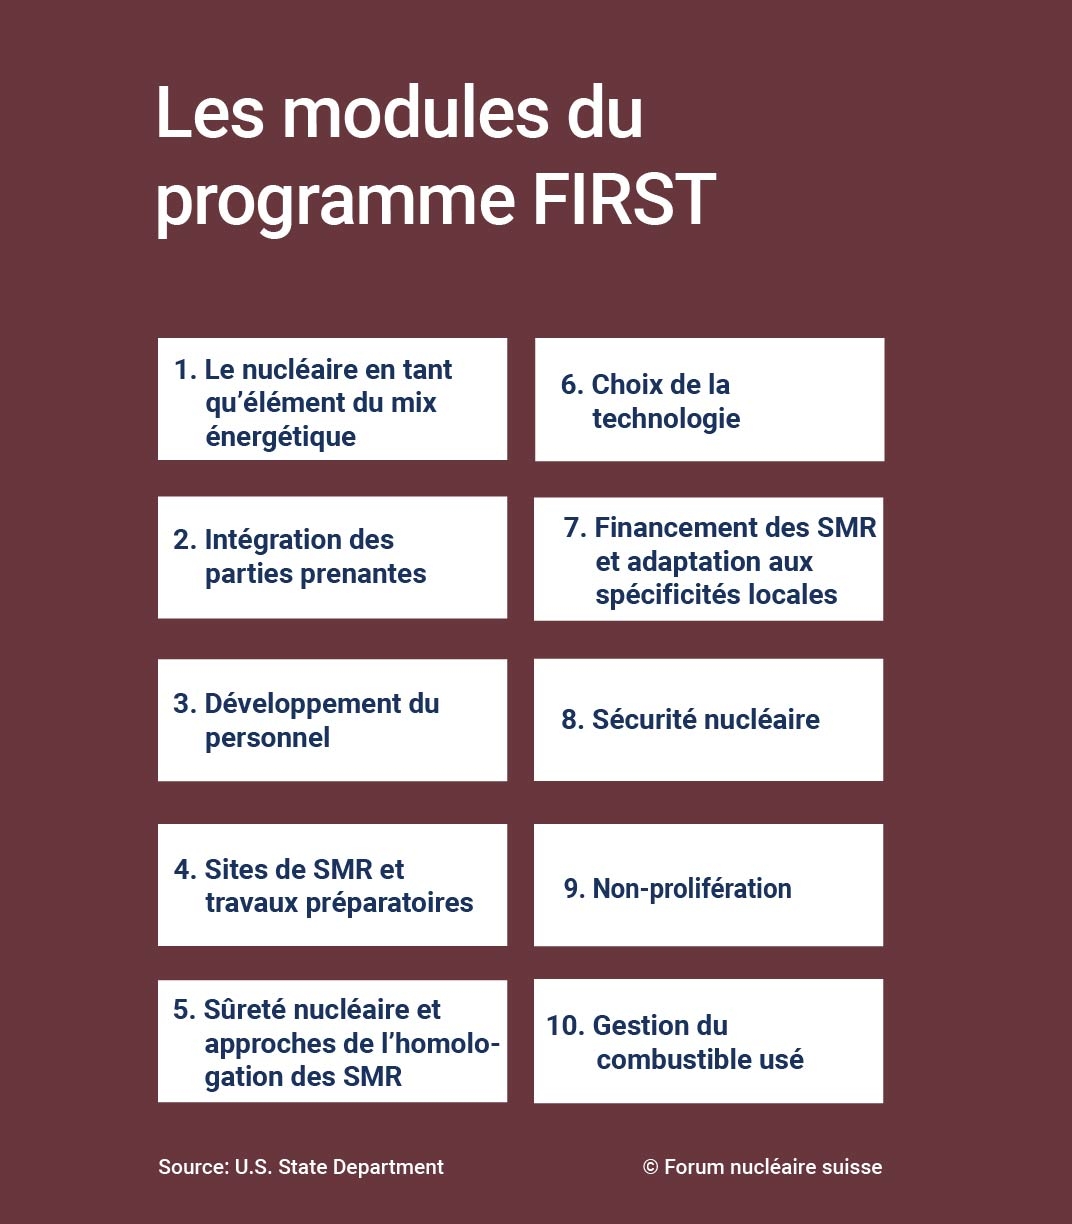 Les modules du programme FIRST